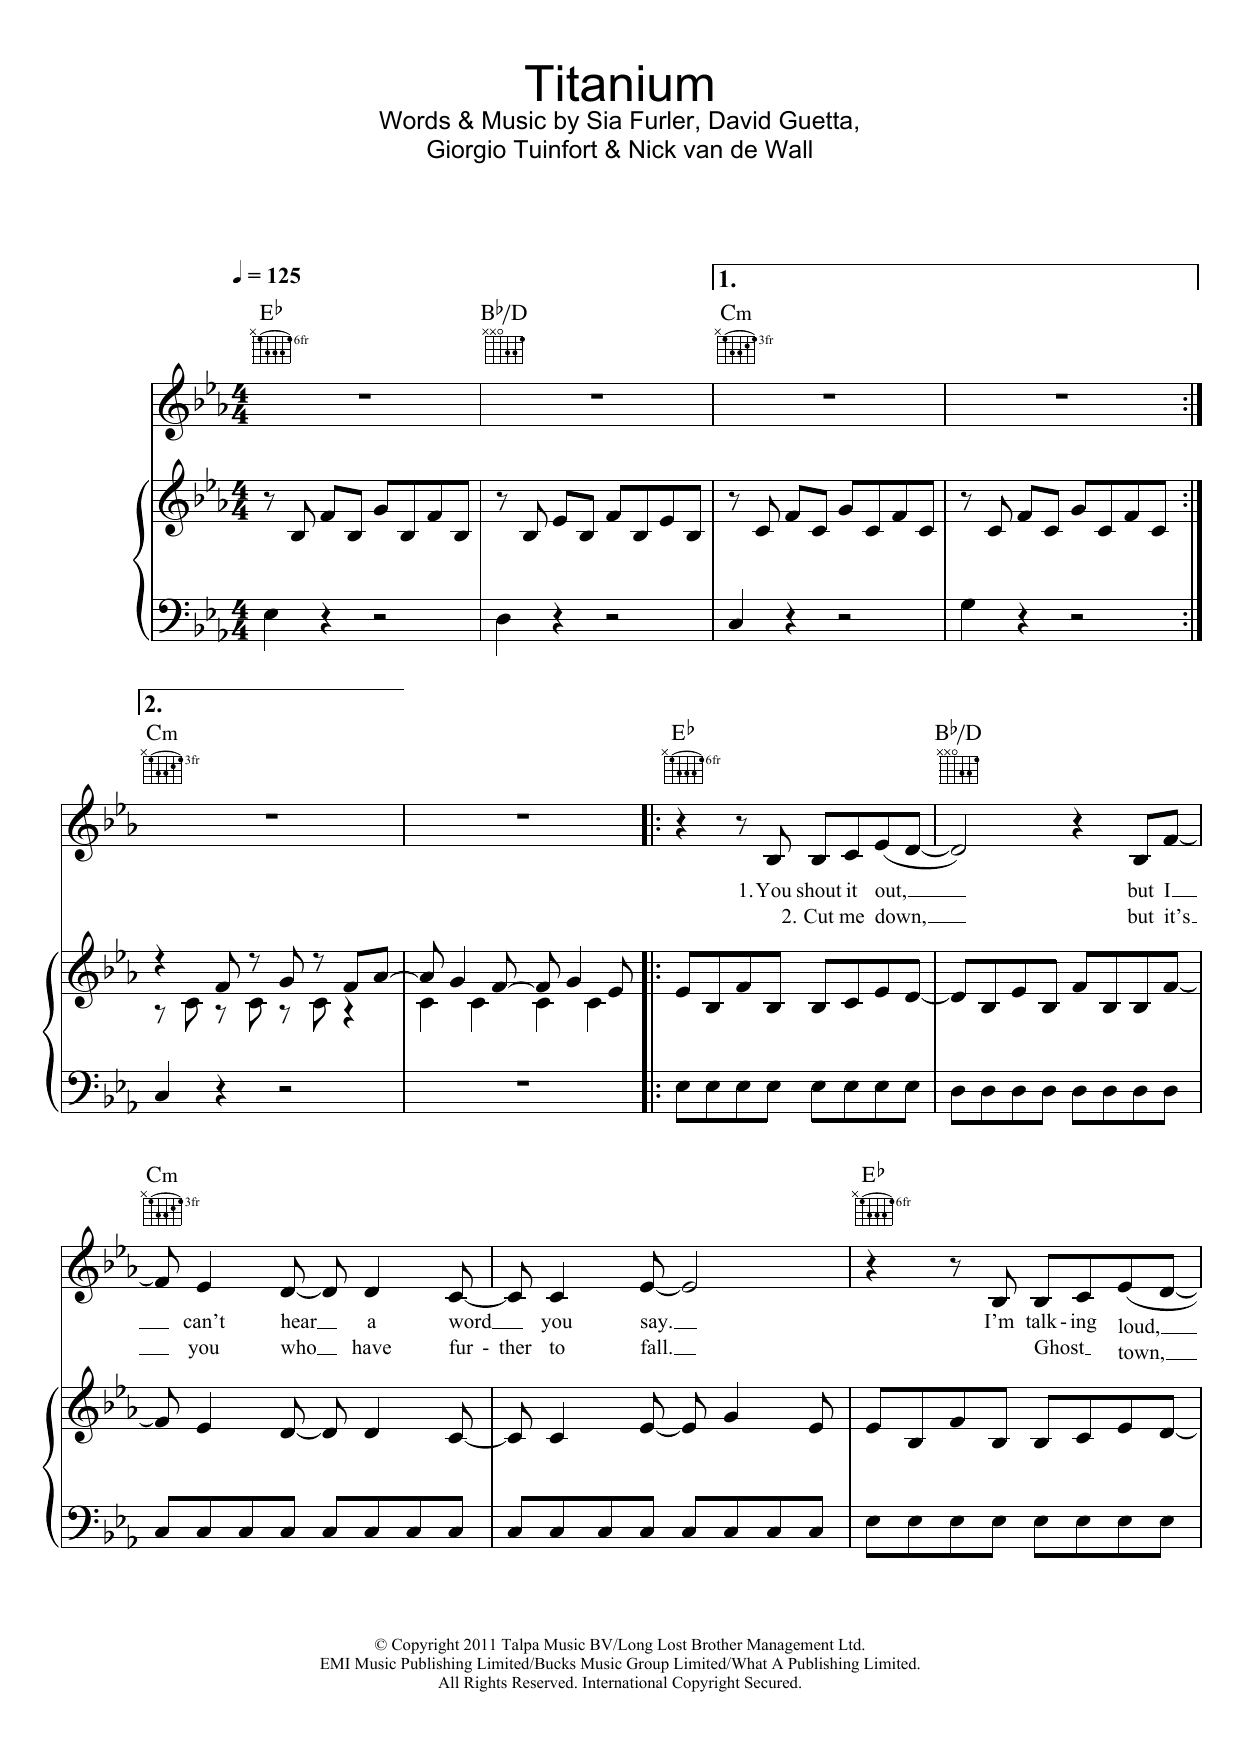 David Guetta Titanium (featuring Sia) Sheet Music Notes & Chords for Clarinet - Download or Print PDF